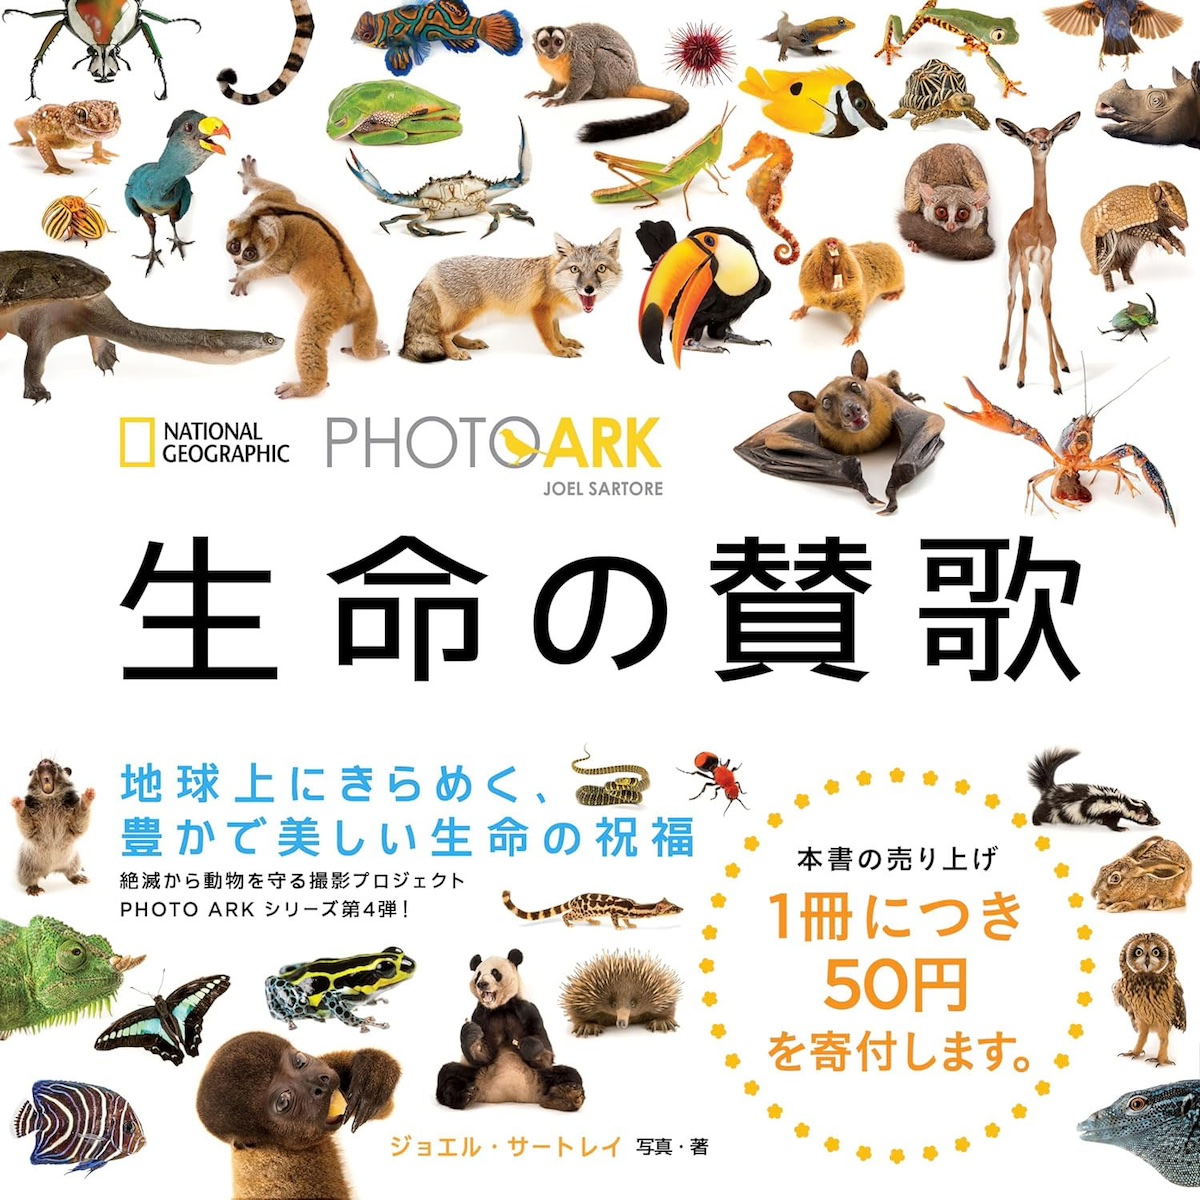 National Geographic Photo Ark Wonders: Celebrating Diversity in the Animal Kingdom｜PHOTO ARK 生命の賛歌 絶滅から動物を守る撮影プロジェクト